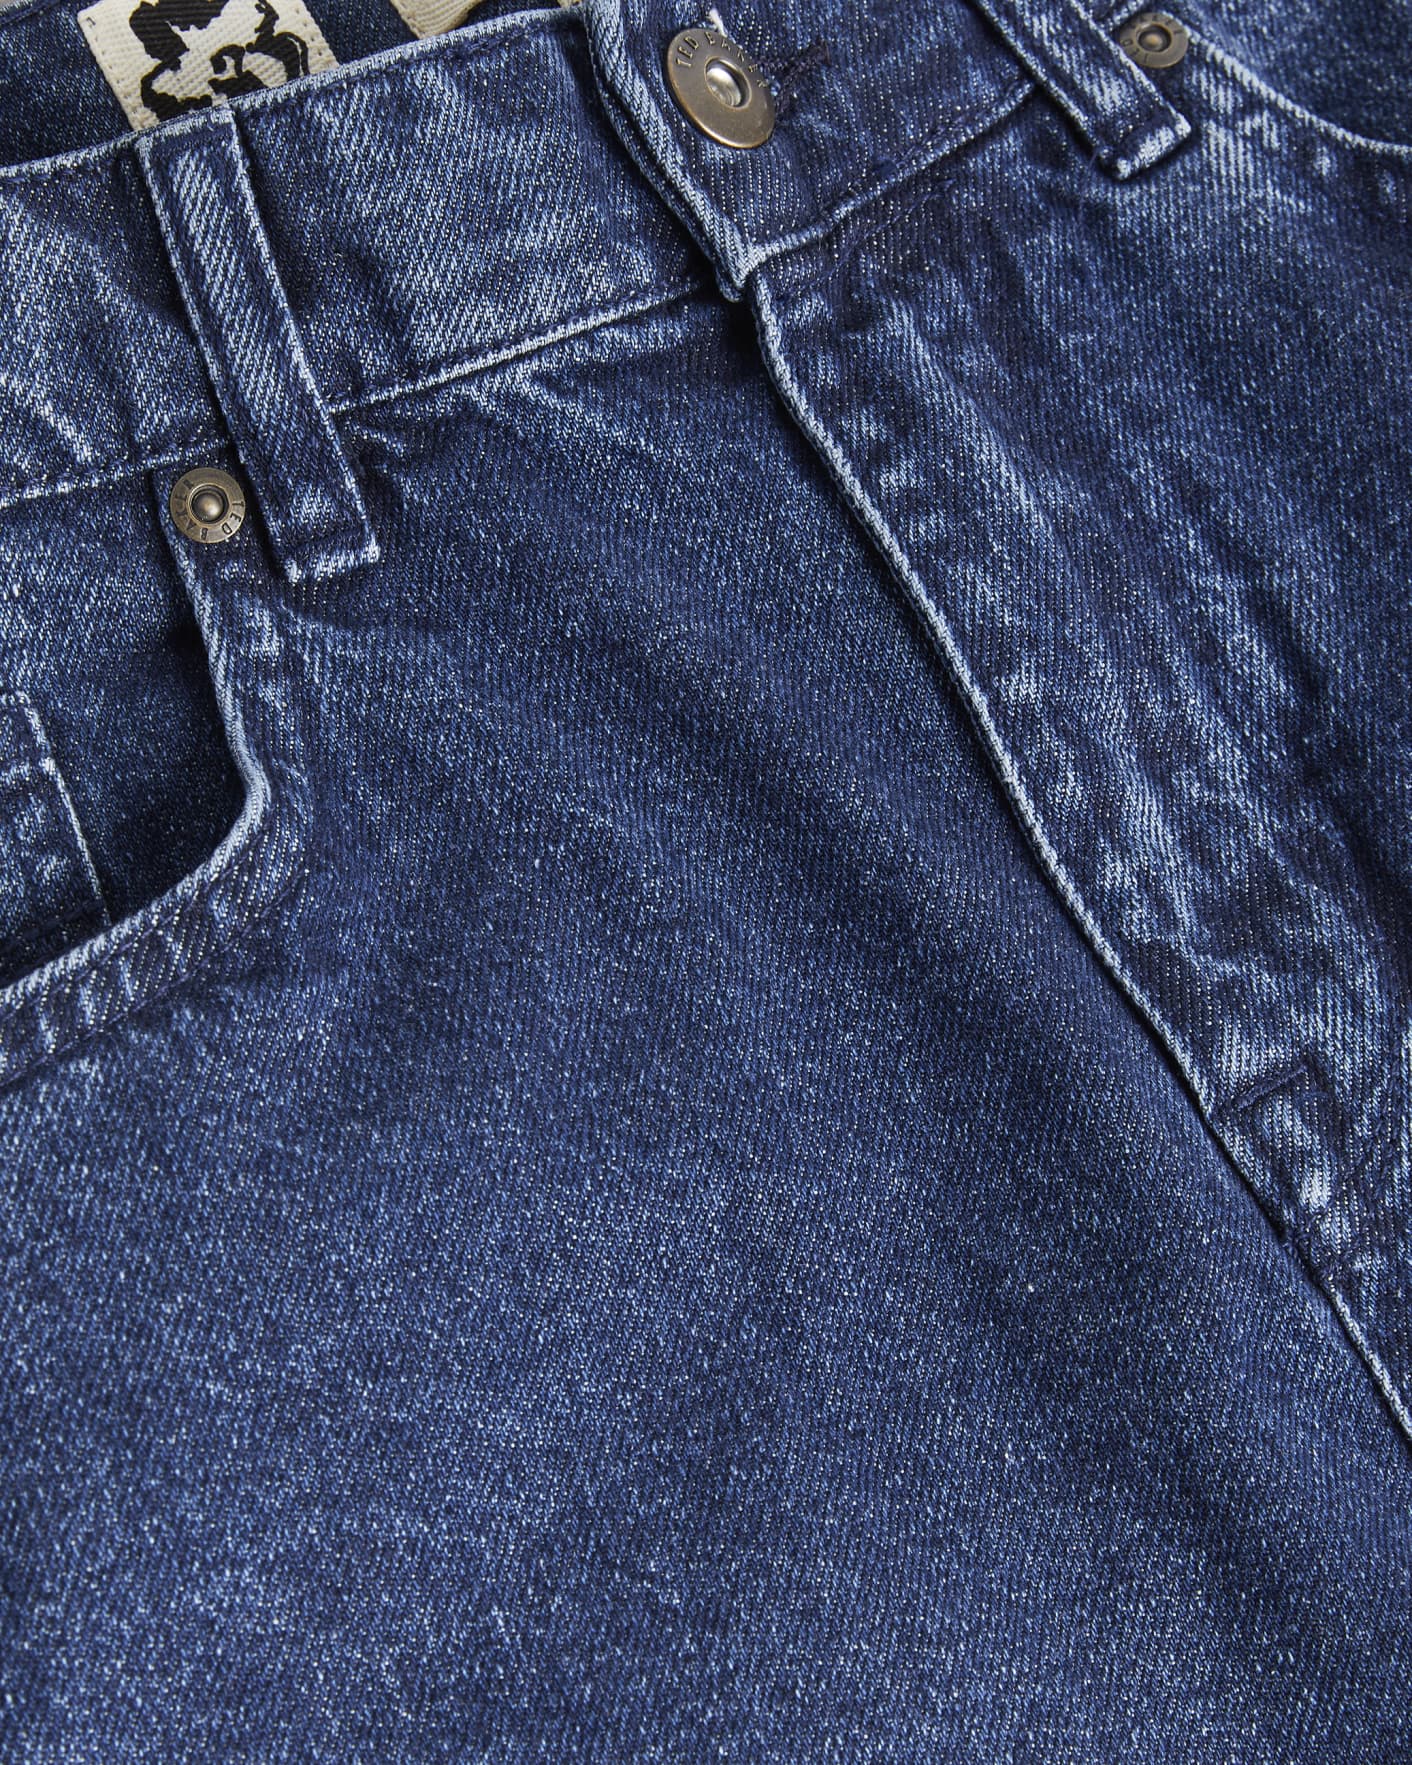 Medium Blue Original Fit Denim Jeans Ted Baker